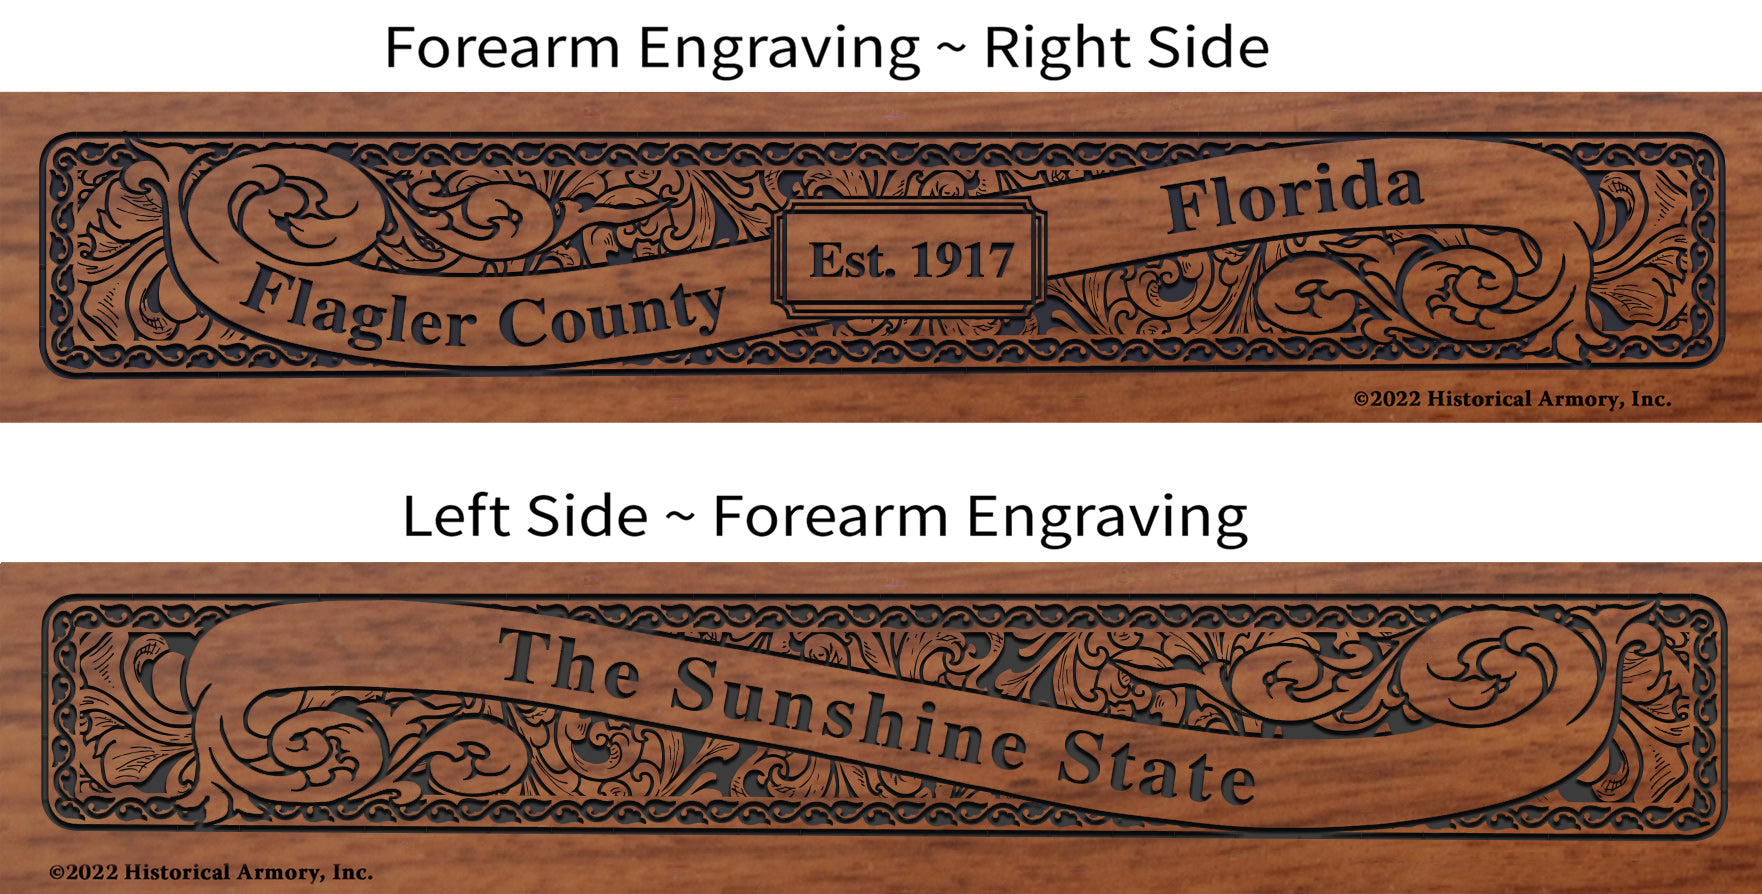 Flagler County Florida Engraved Rifle Forearm